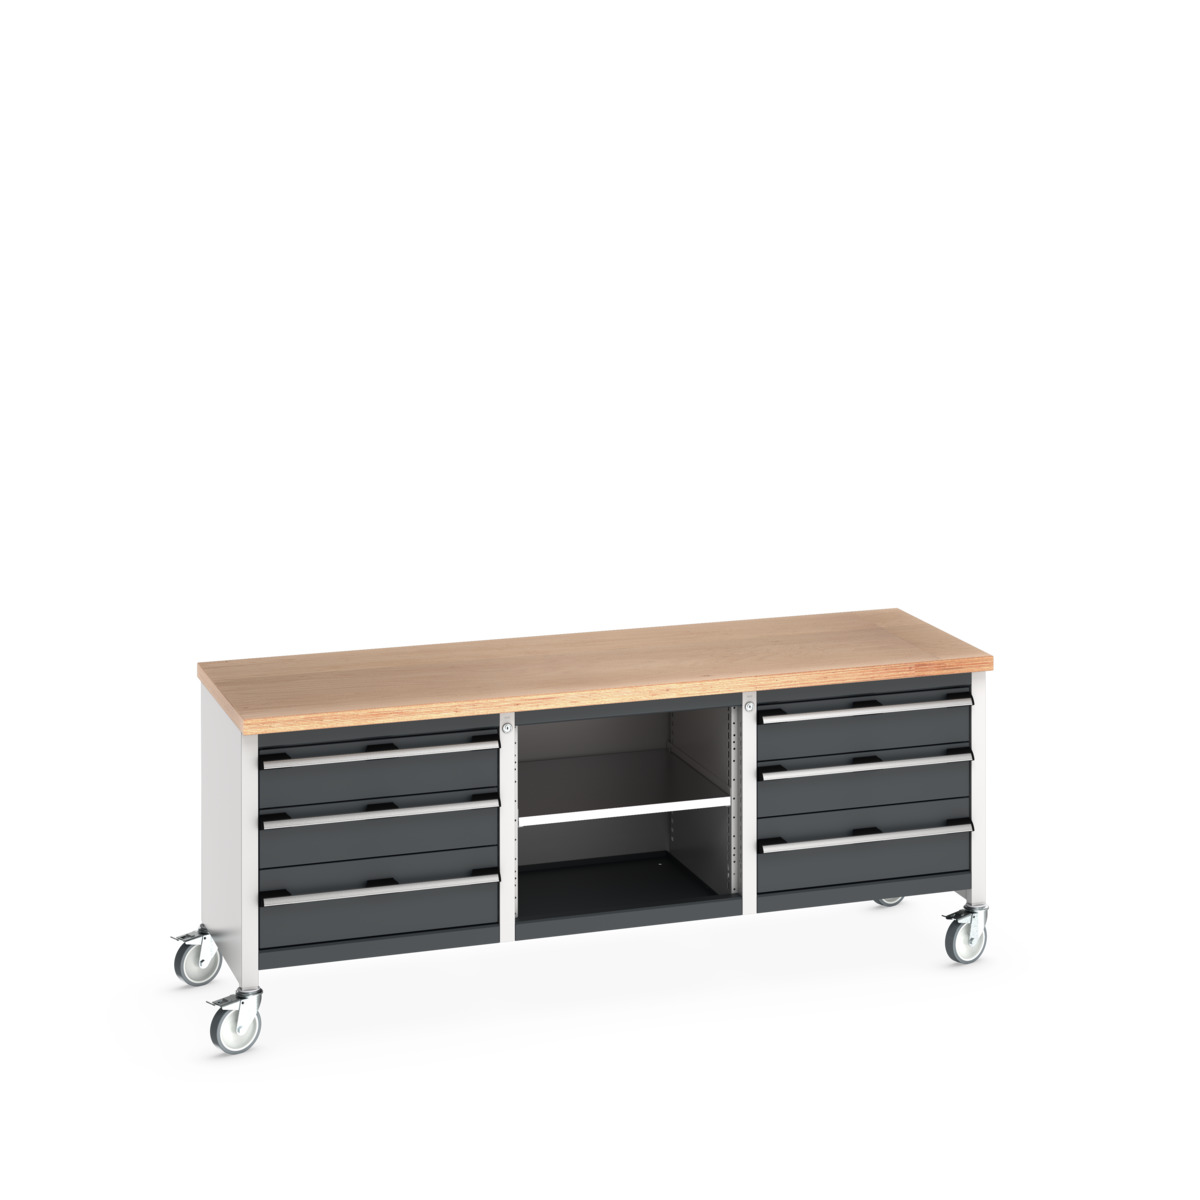 41002130. - cubio mobile storage bench (mpx)